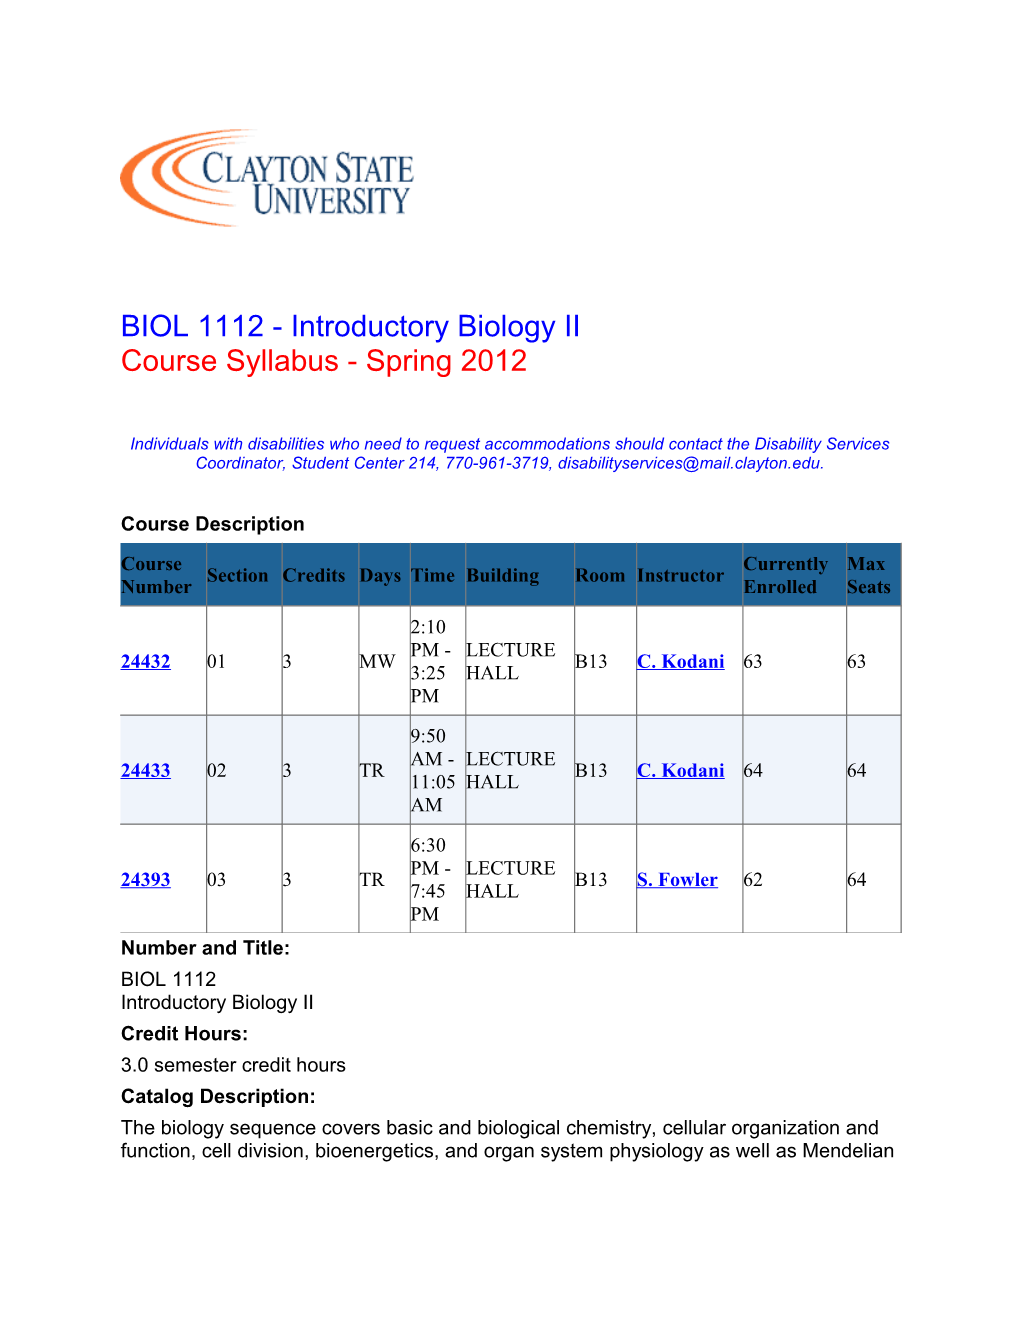 BIOL 1112 - Introductory Biology II Course Syllabus - Spring 2012